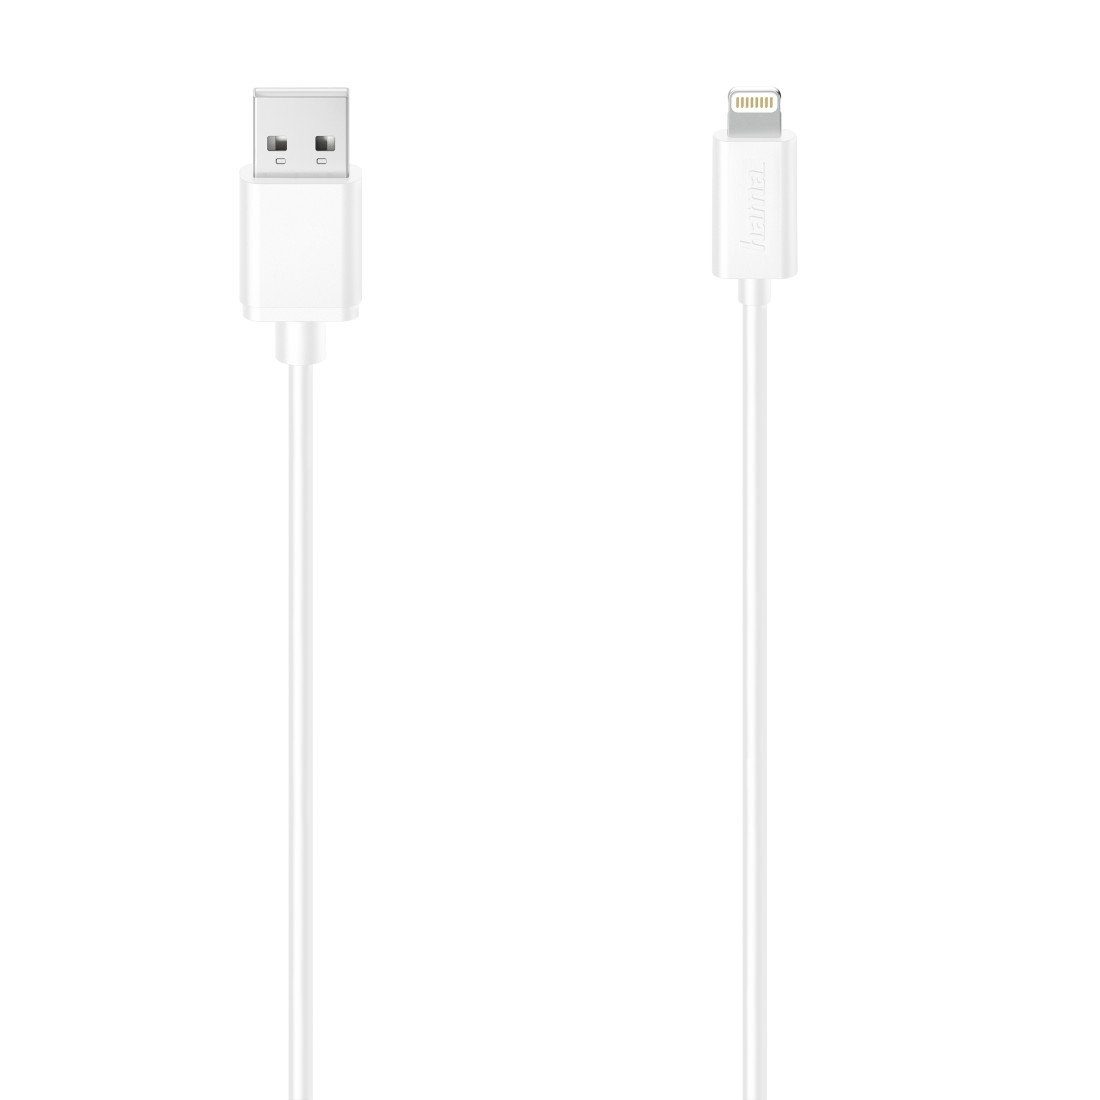 1,50 Kabel Lightning für (150 Connector, und Lightning, mit m USB Typ Hama A, 2.0, USB cm) iPad iPhone USB USB-Kabel,